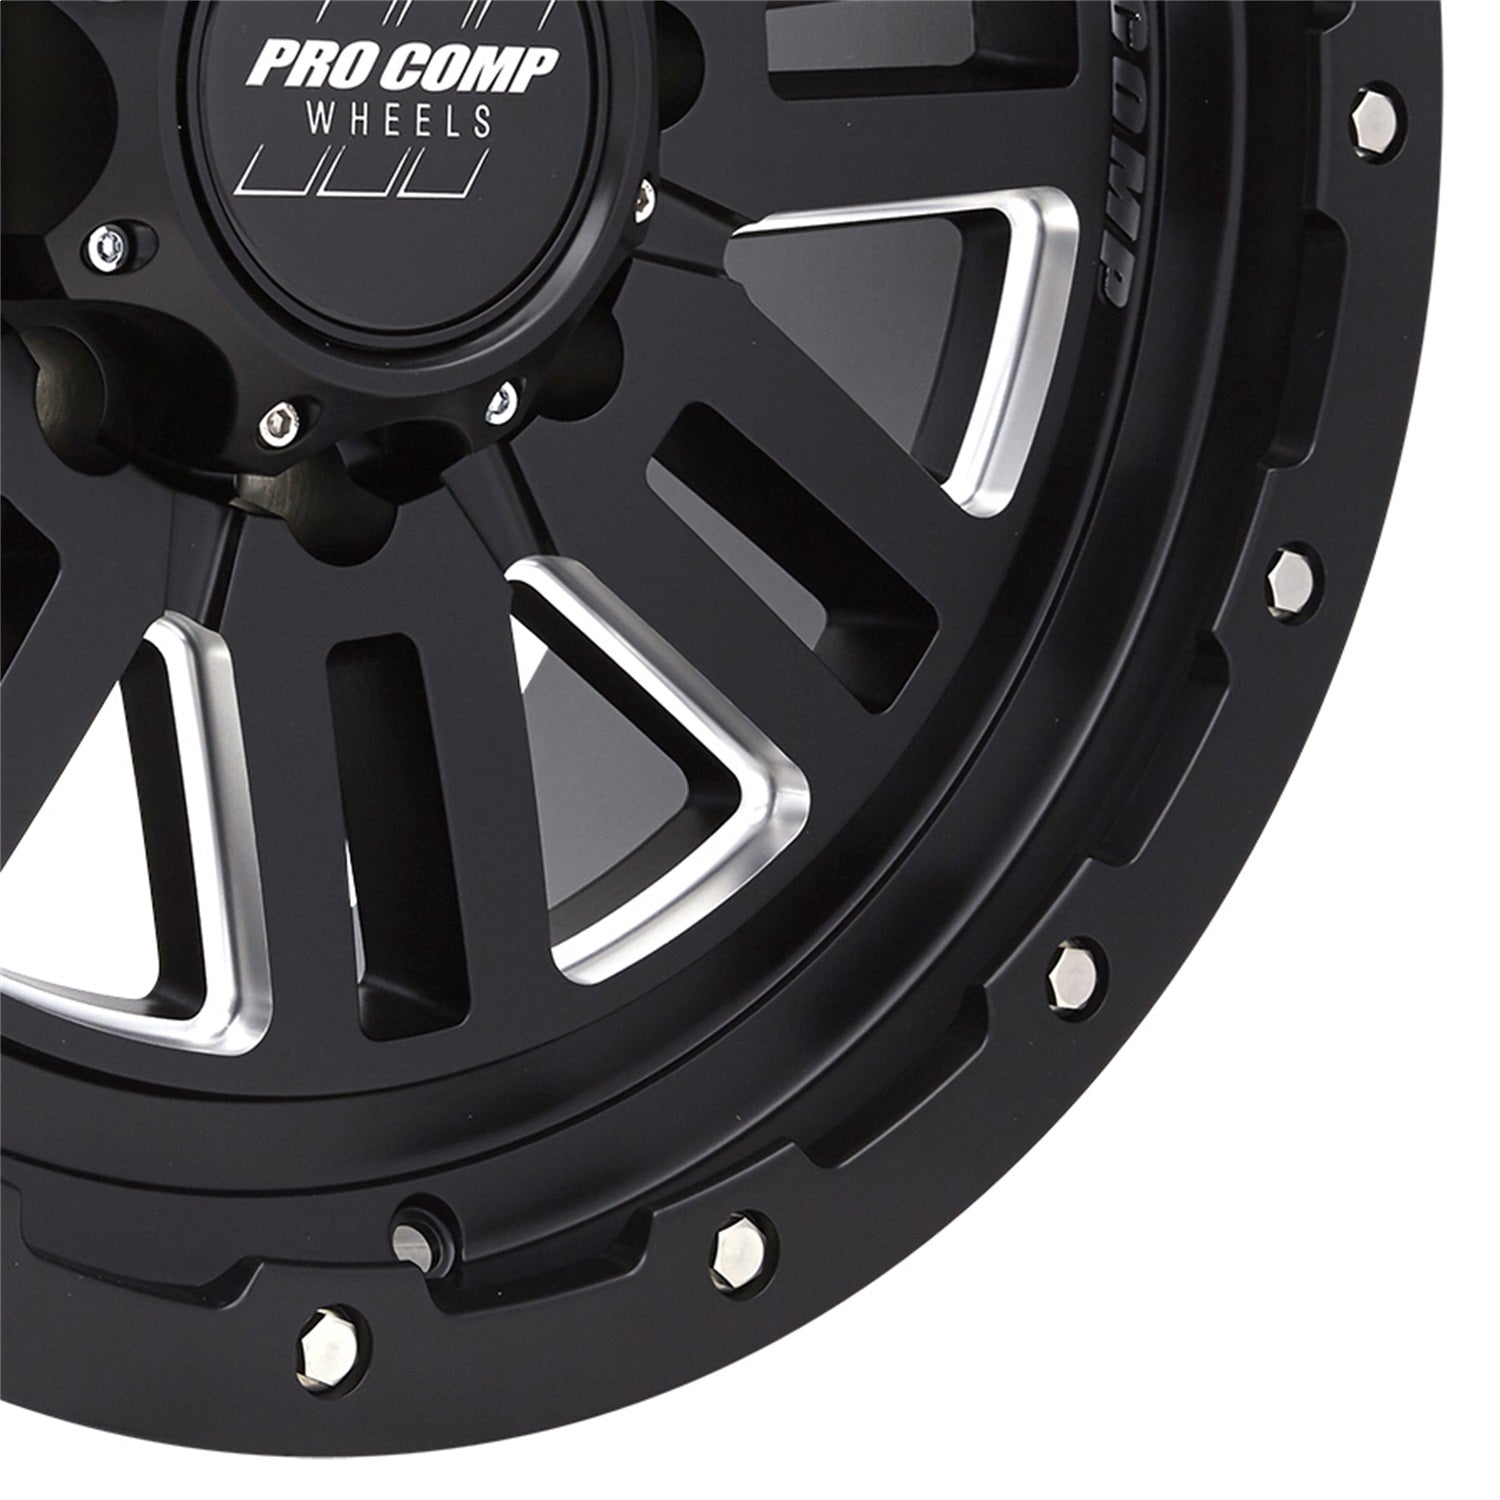 Pro Comp Wheels 5161-298250 Cognos Series Black Milled